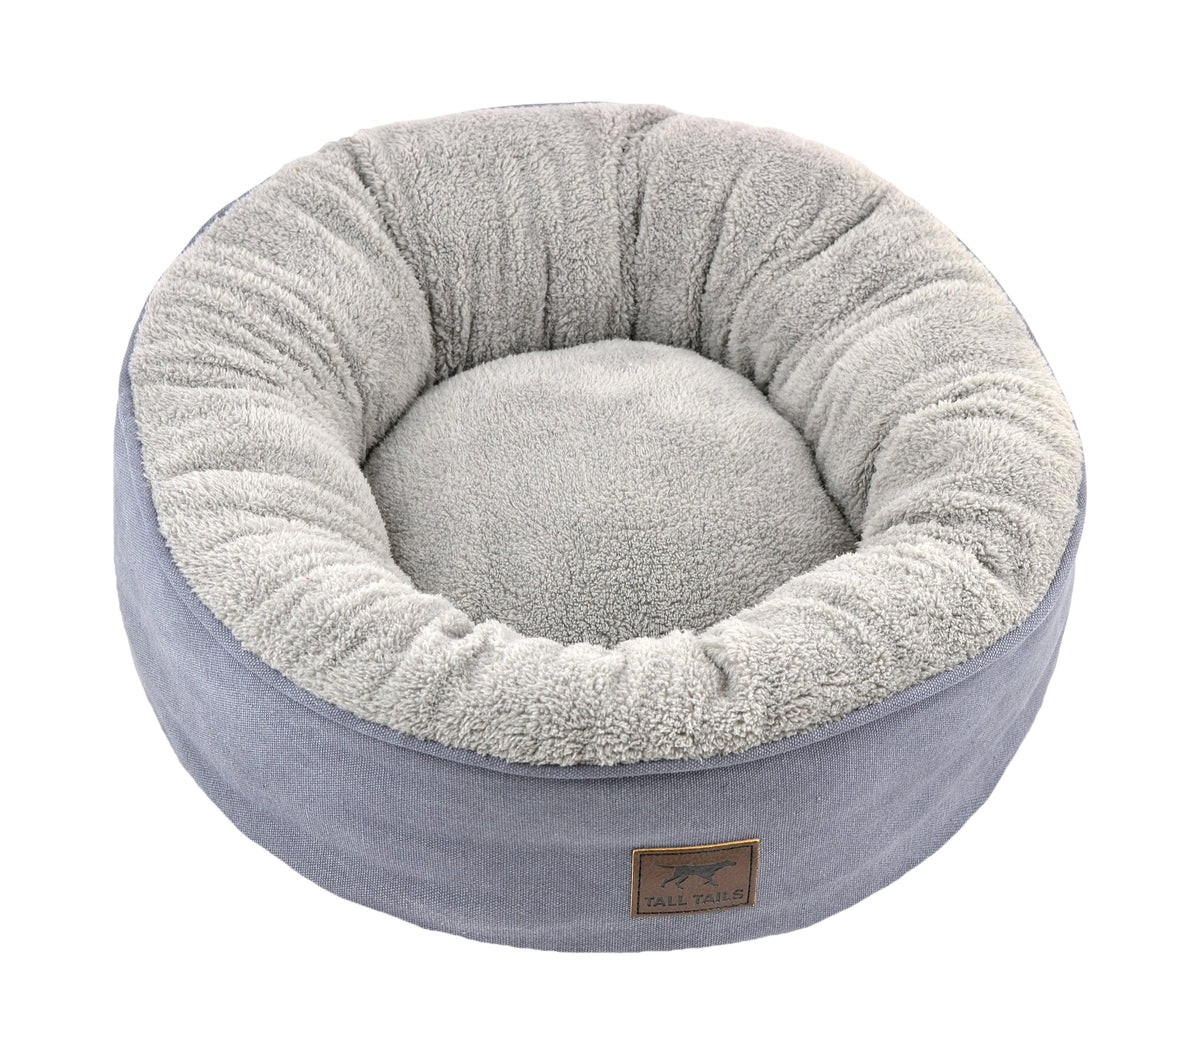 Tall Tails Cushion Bed Charcoal Medium - Ruff Haus Pets